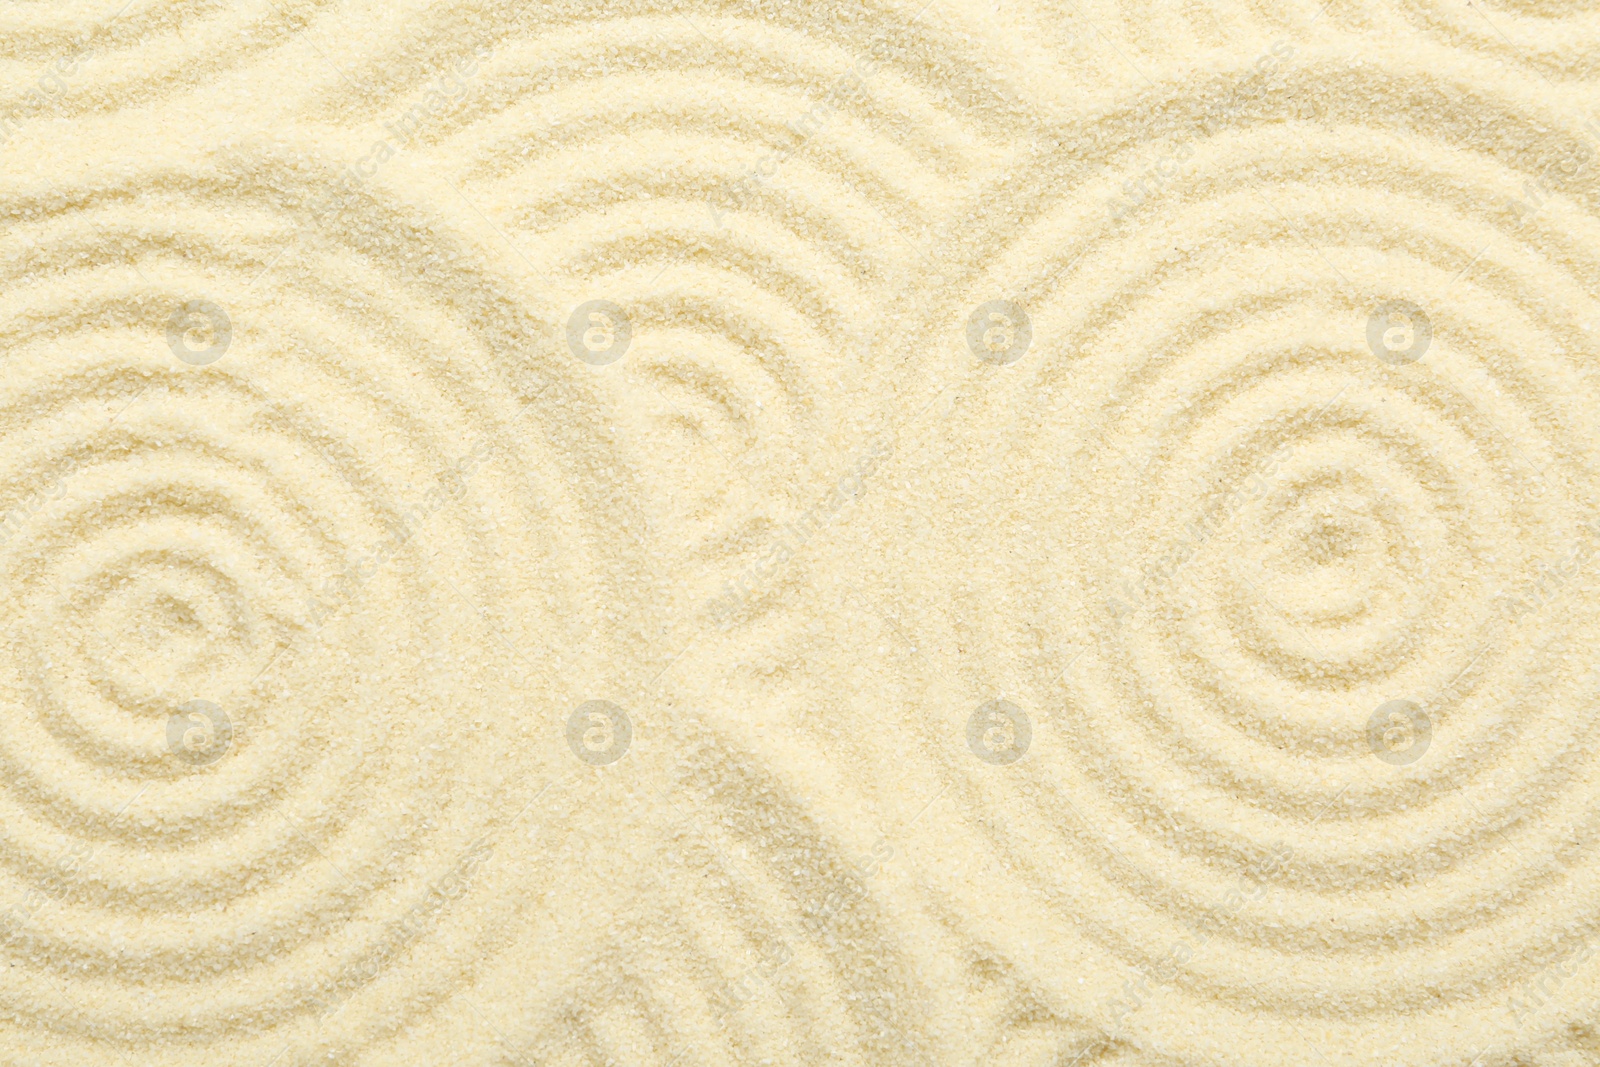 Photo of Zen rock garden. Circle patterns on beige sand, top view